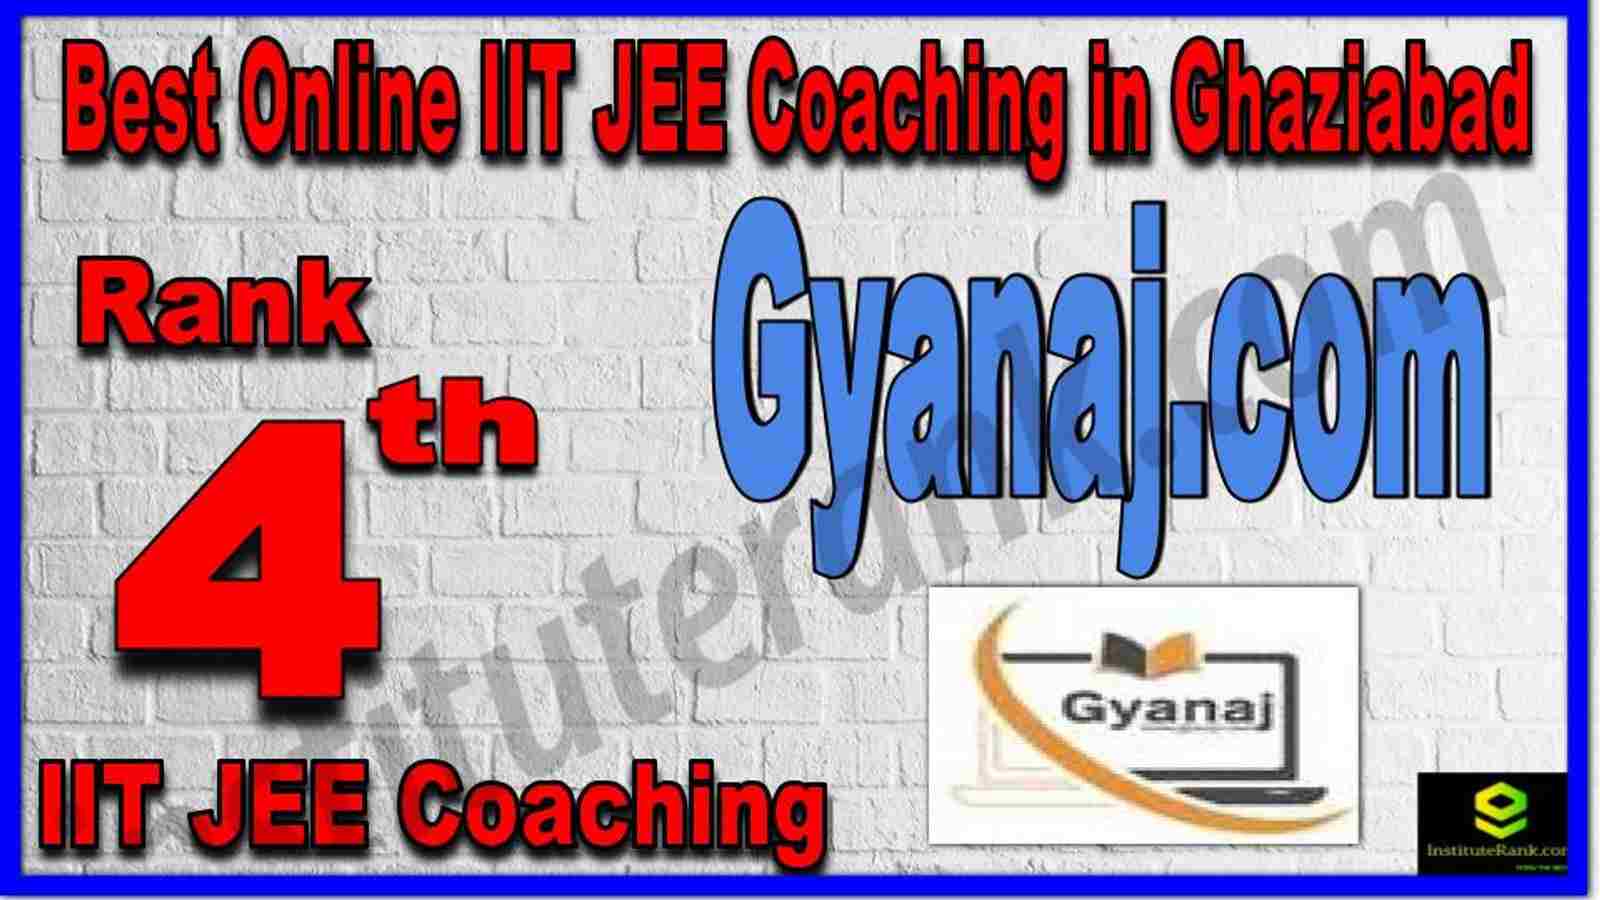 Rank 4th Best Online IIT JEE Coaching in Ghaziabad